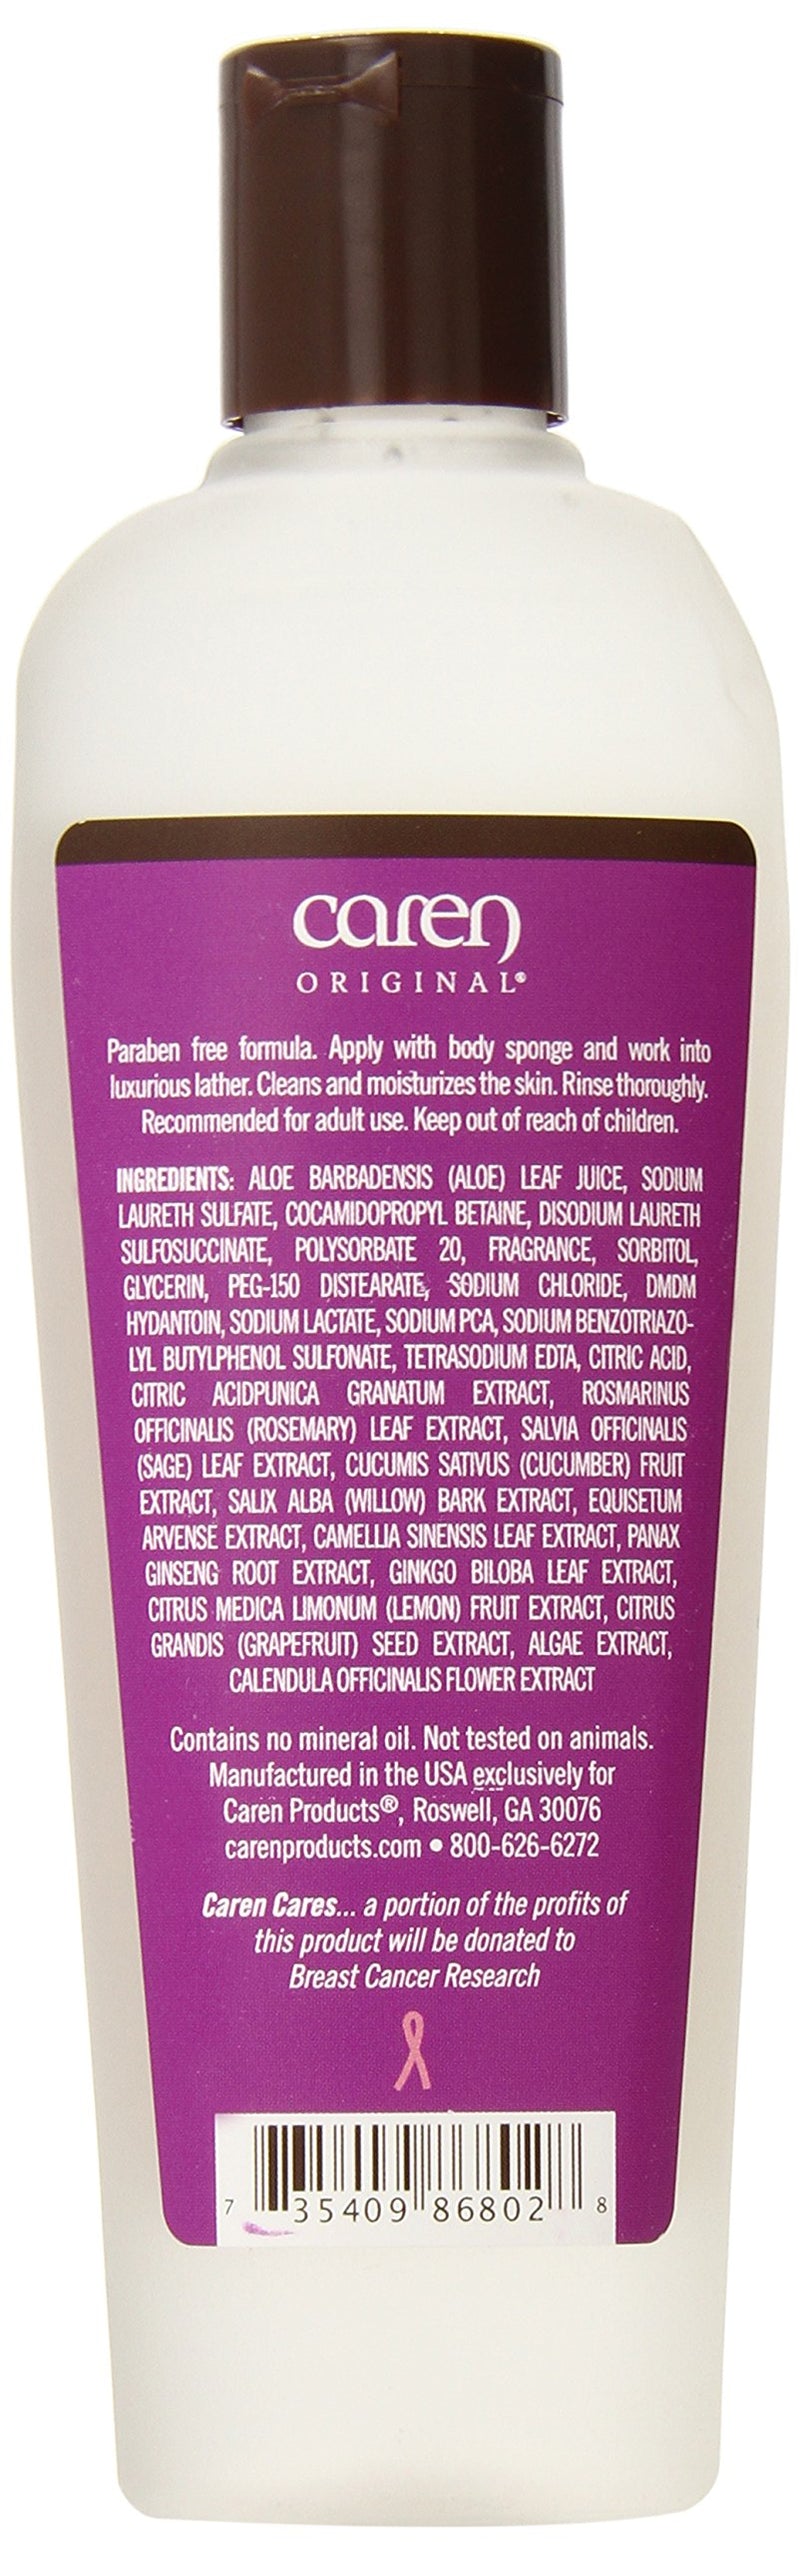 Caren Original Renew Body Cleanse, Clear, 8 Ounce - BeesActive Australia